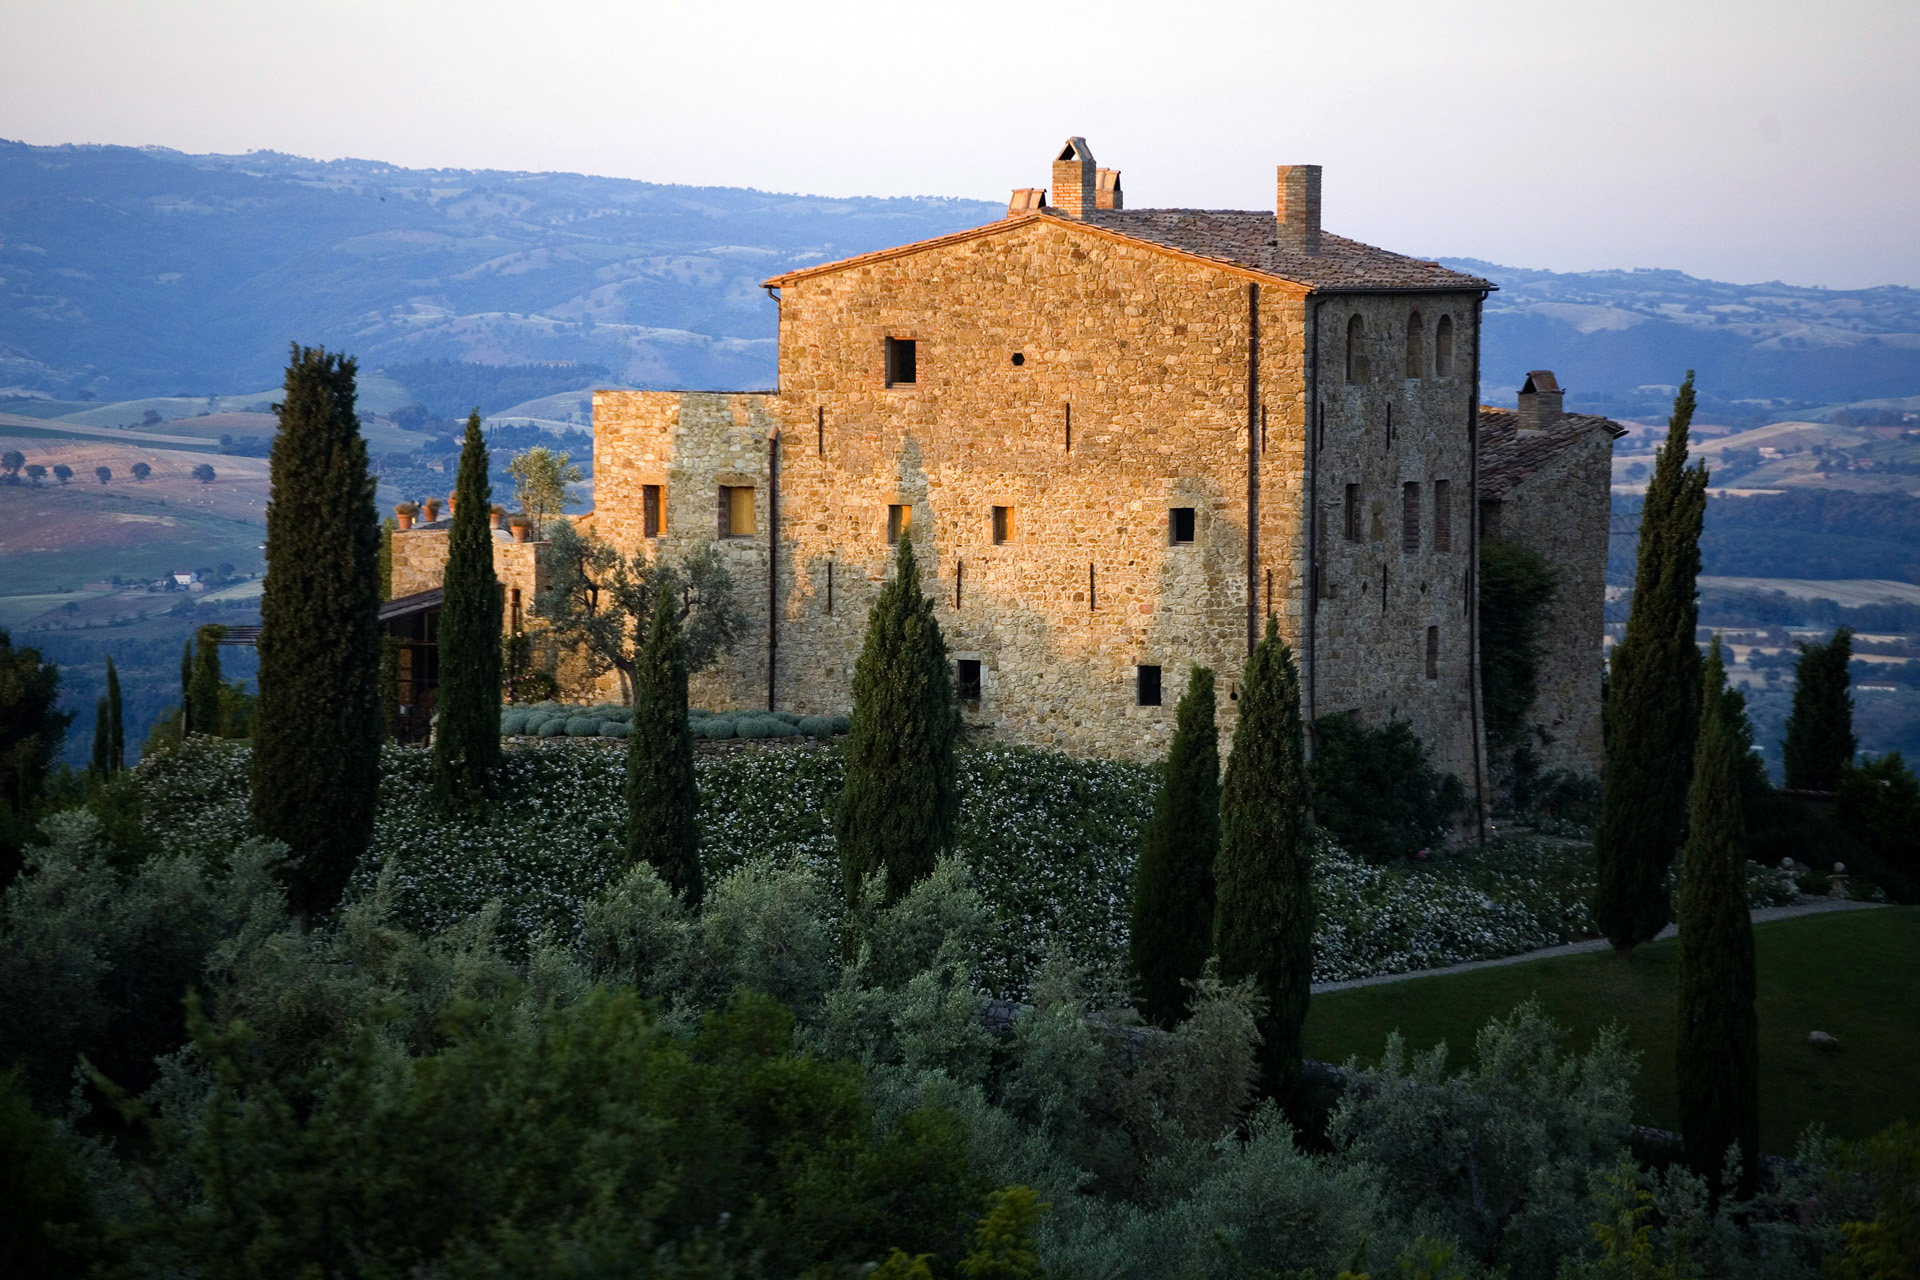 The castello at sunset